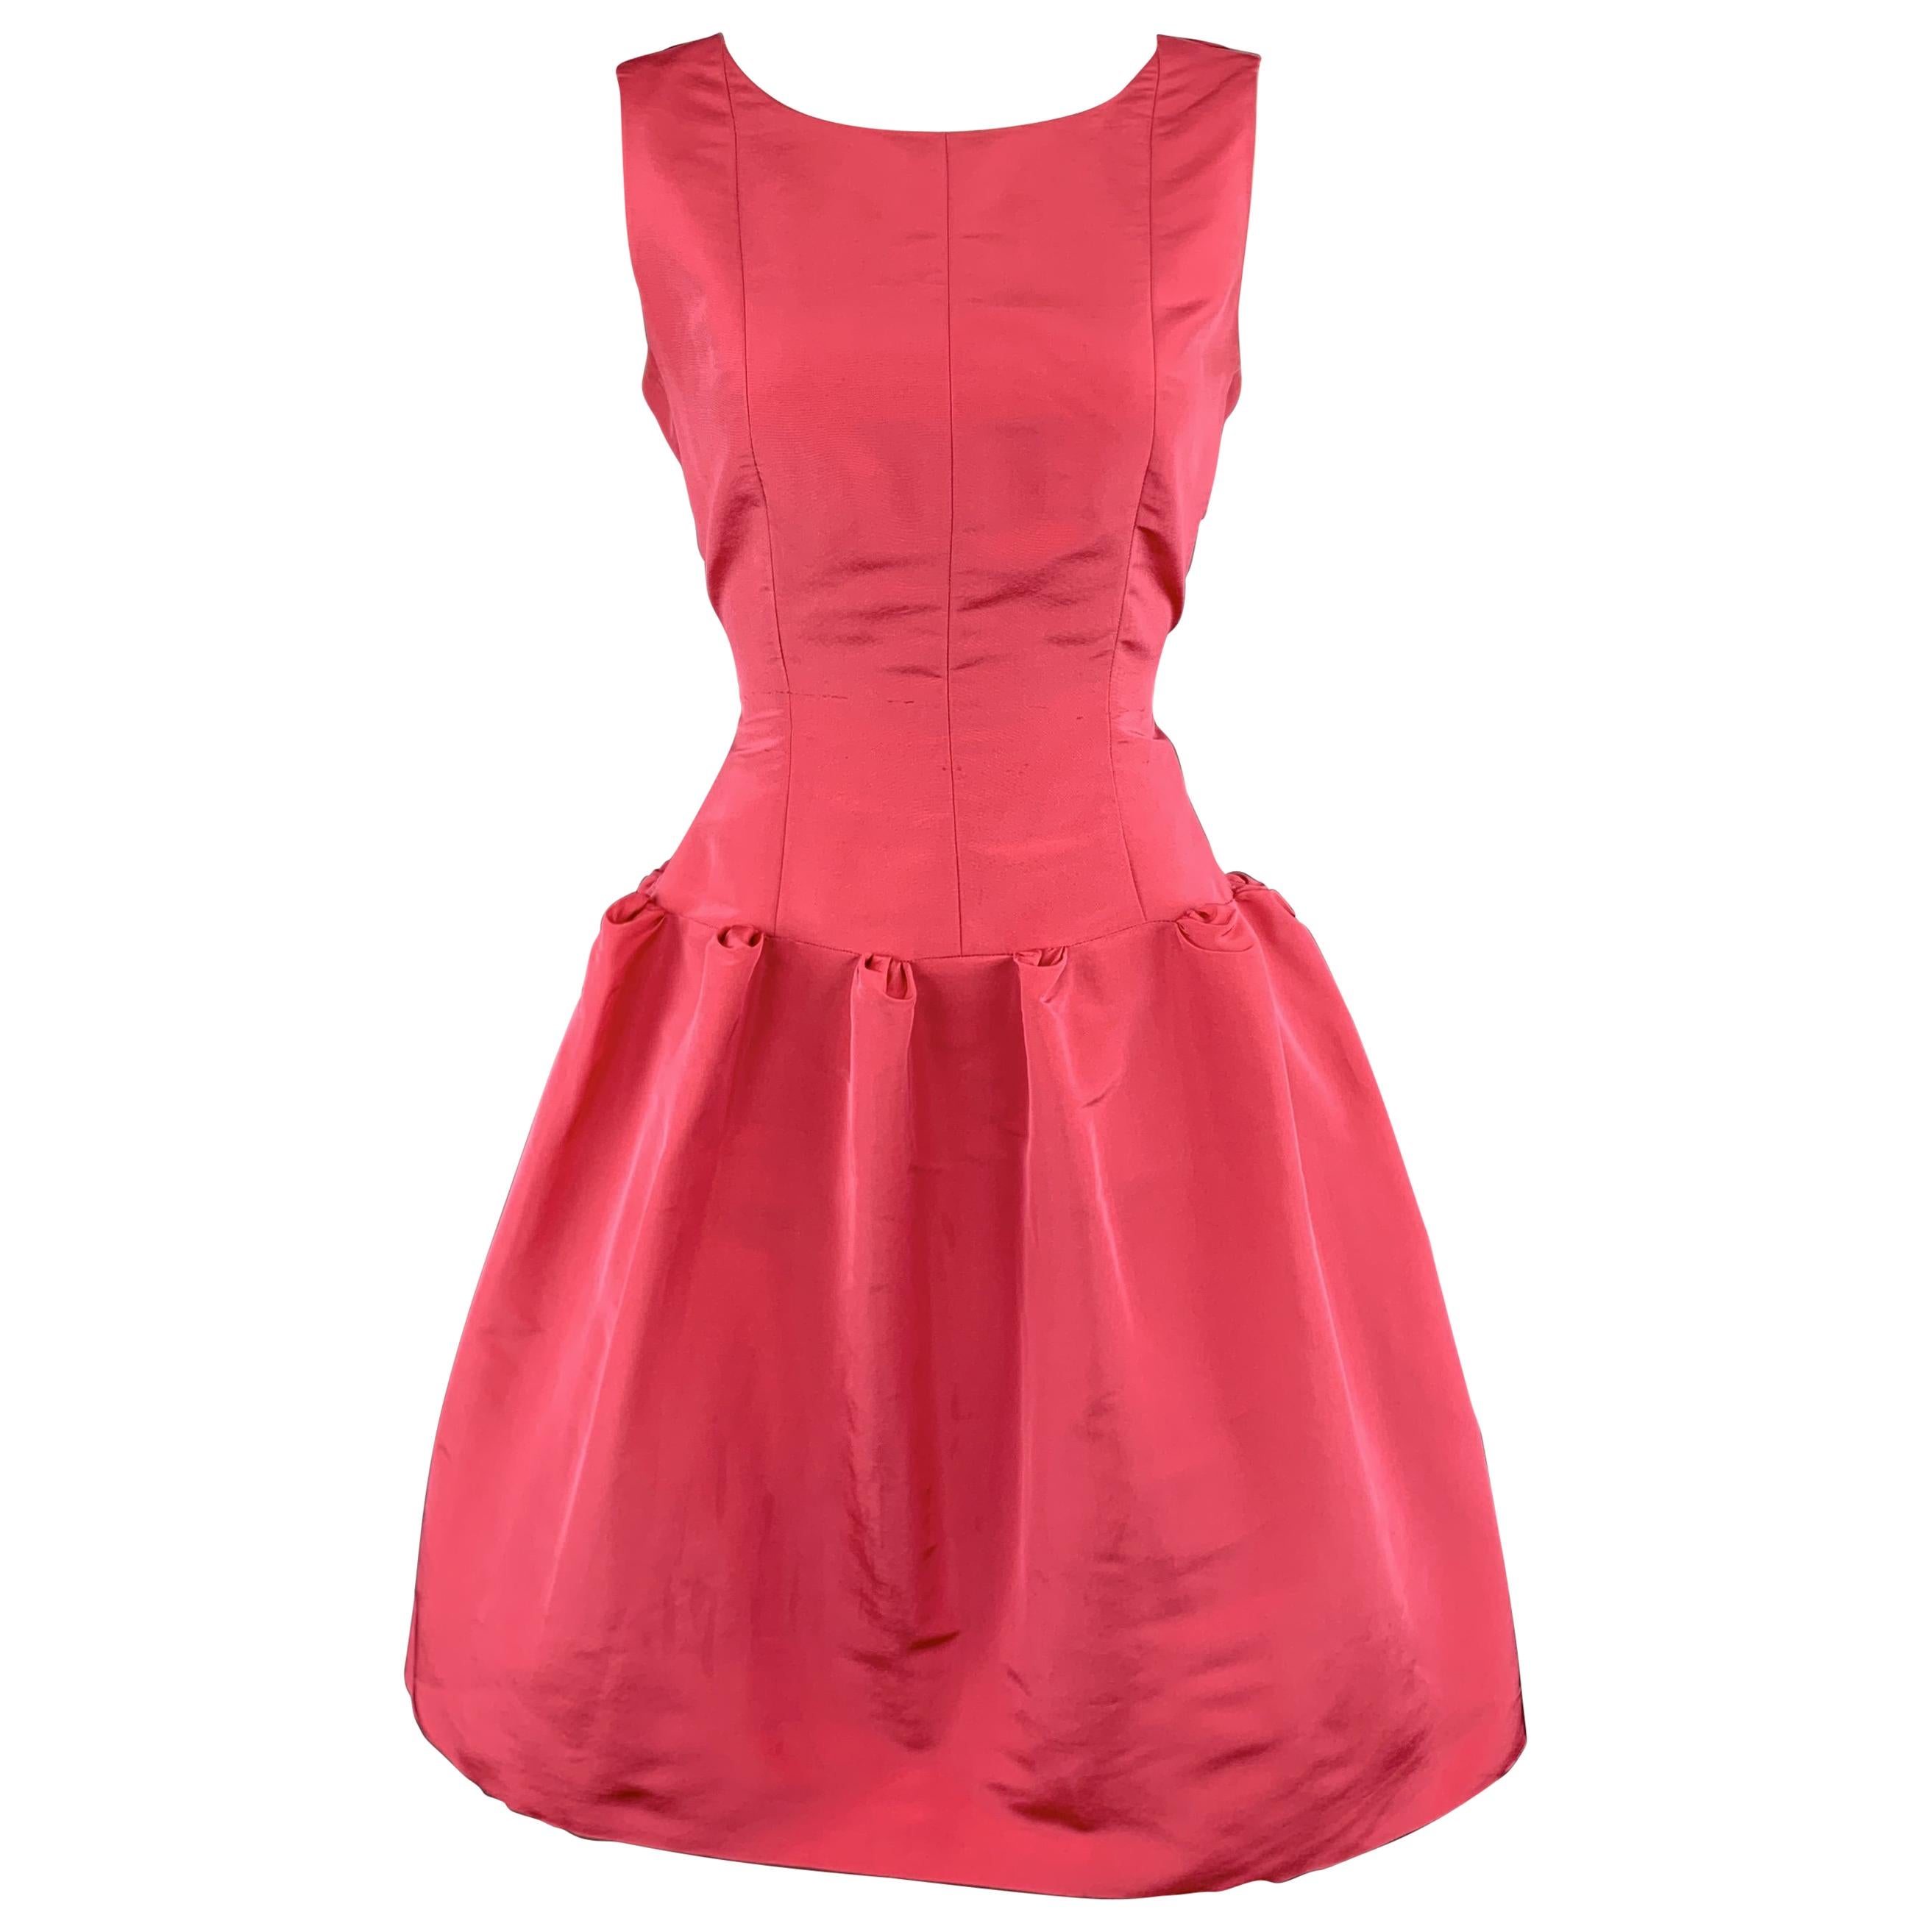 OSCAR DE LA RENTA Size 8 Pink Faille Structured Skirt Cocktail Dress